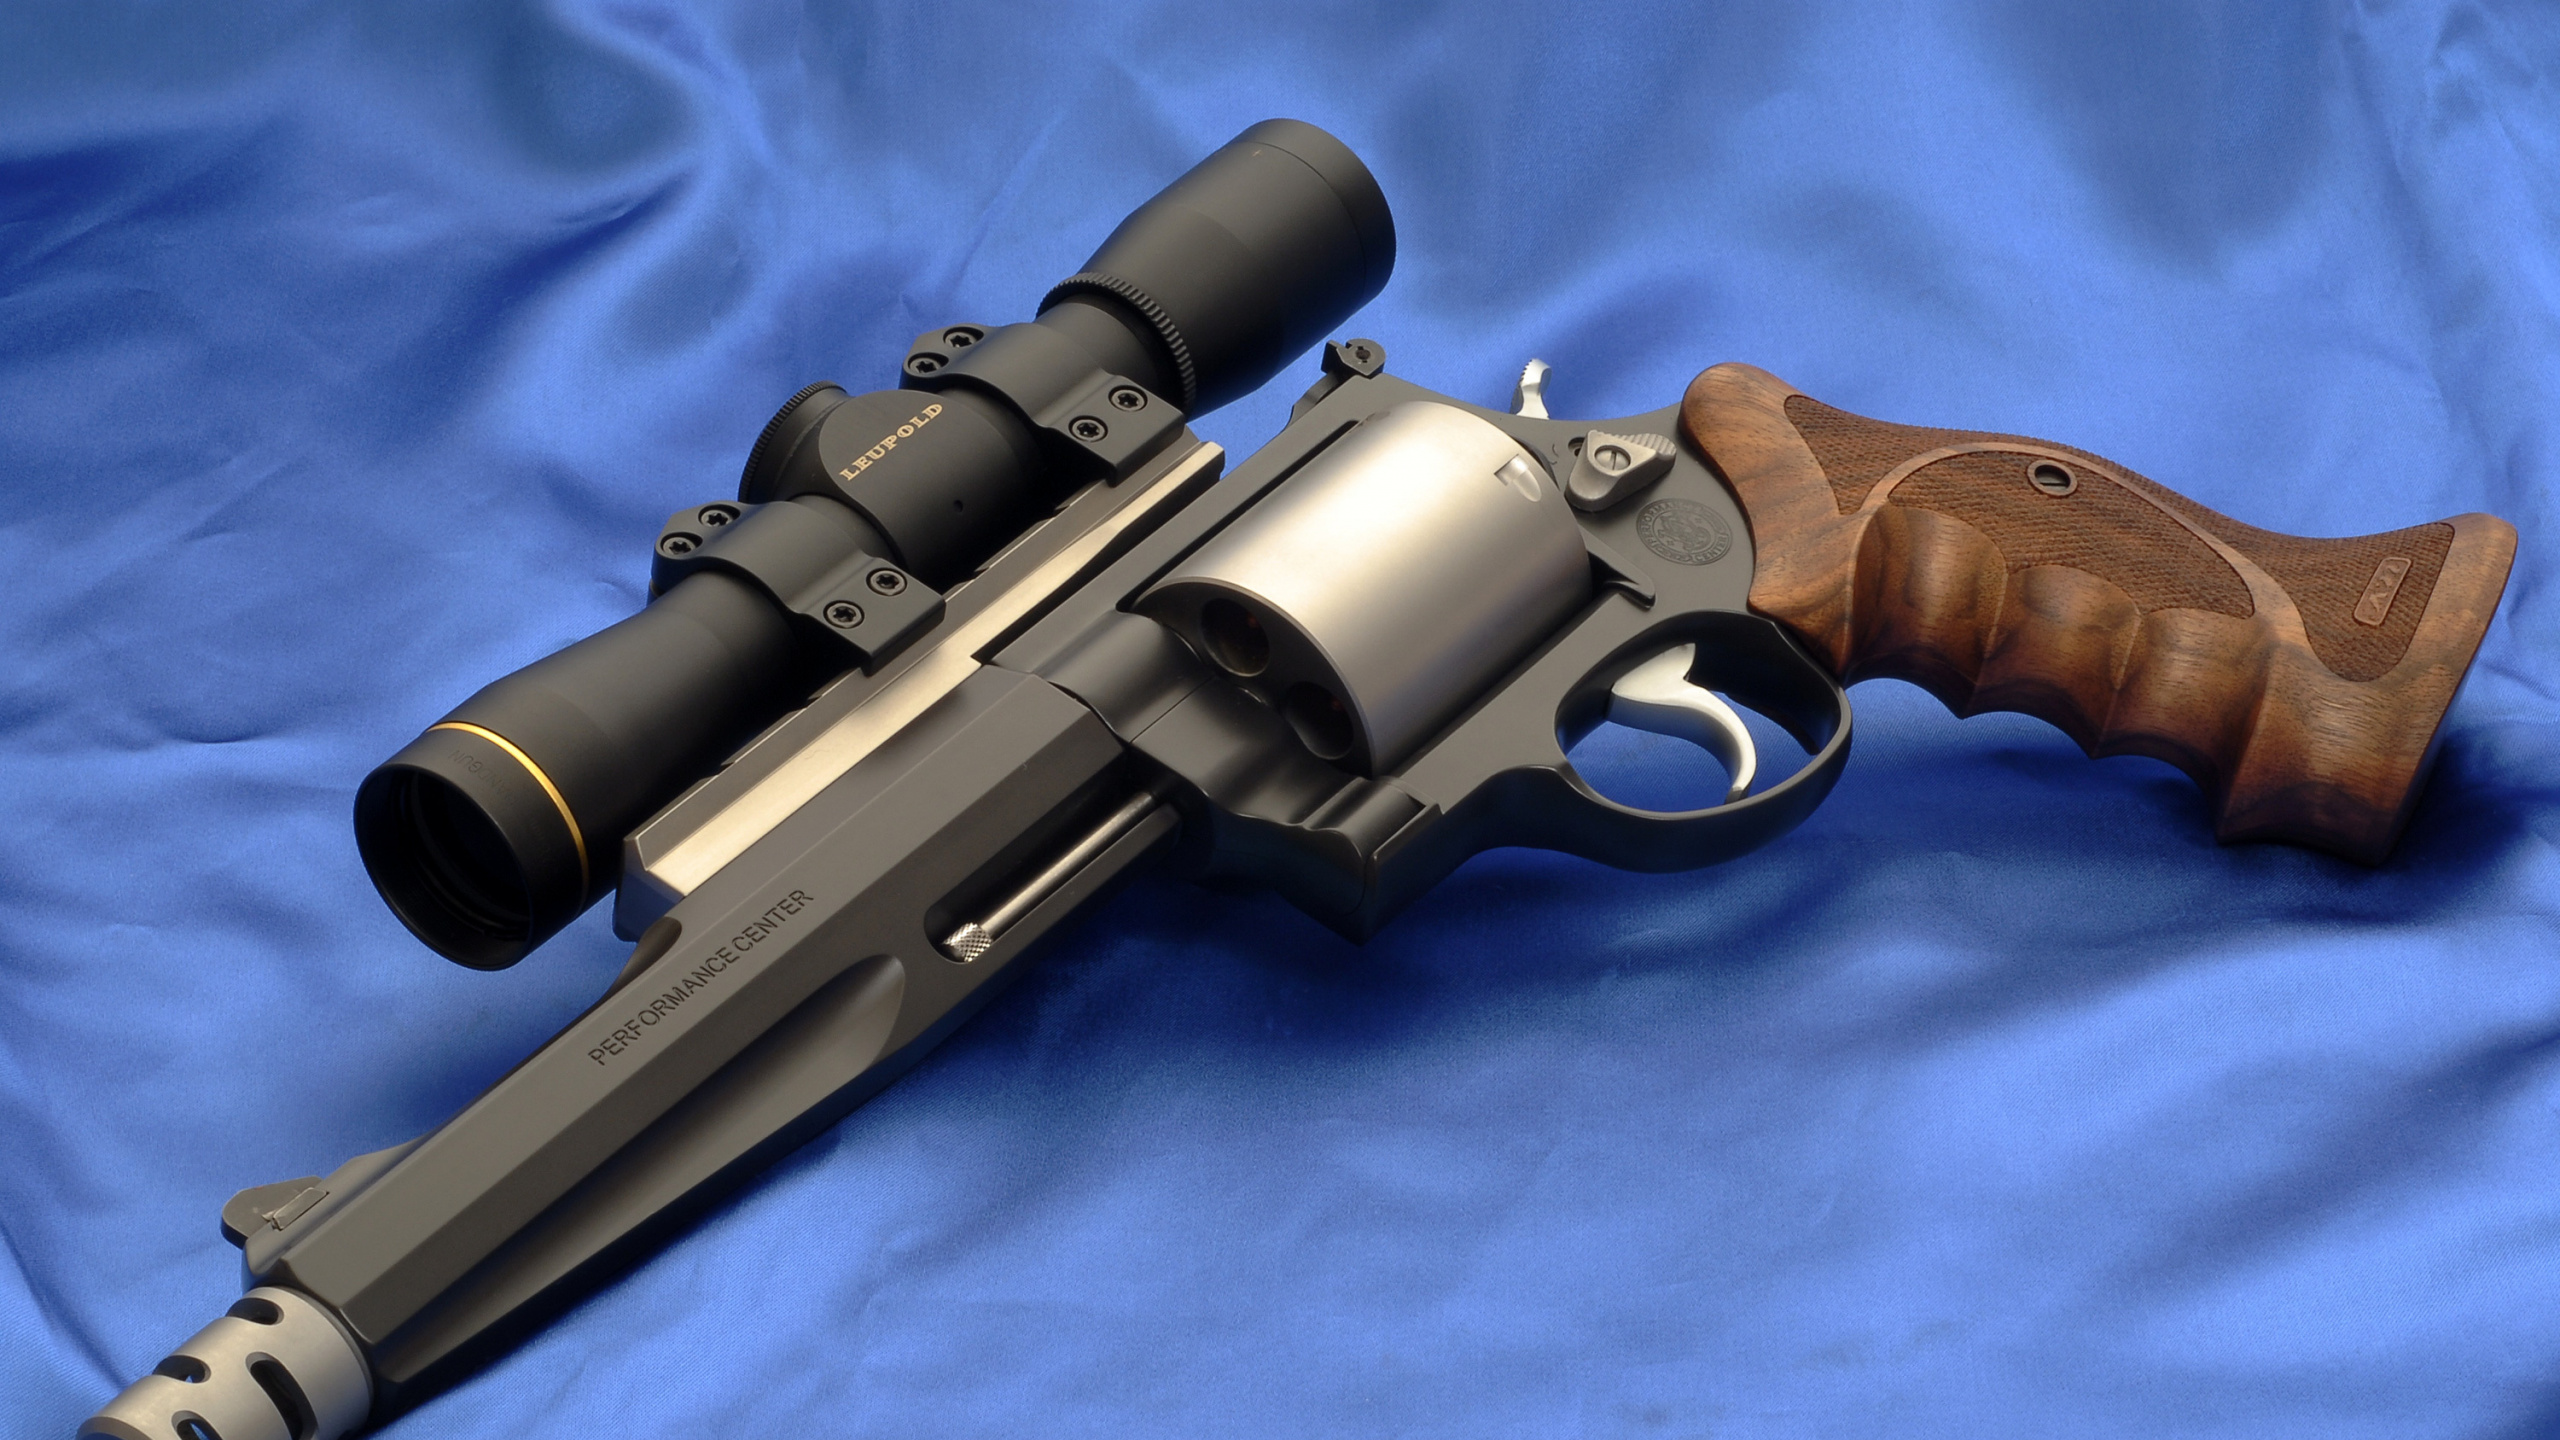 Pistola, Arma, Gatillo, Revolver, Pistola de Aire. Wallpaper in 2560x1440 Resolution